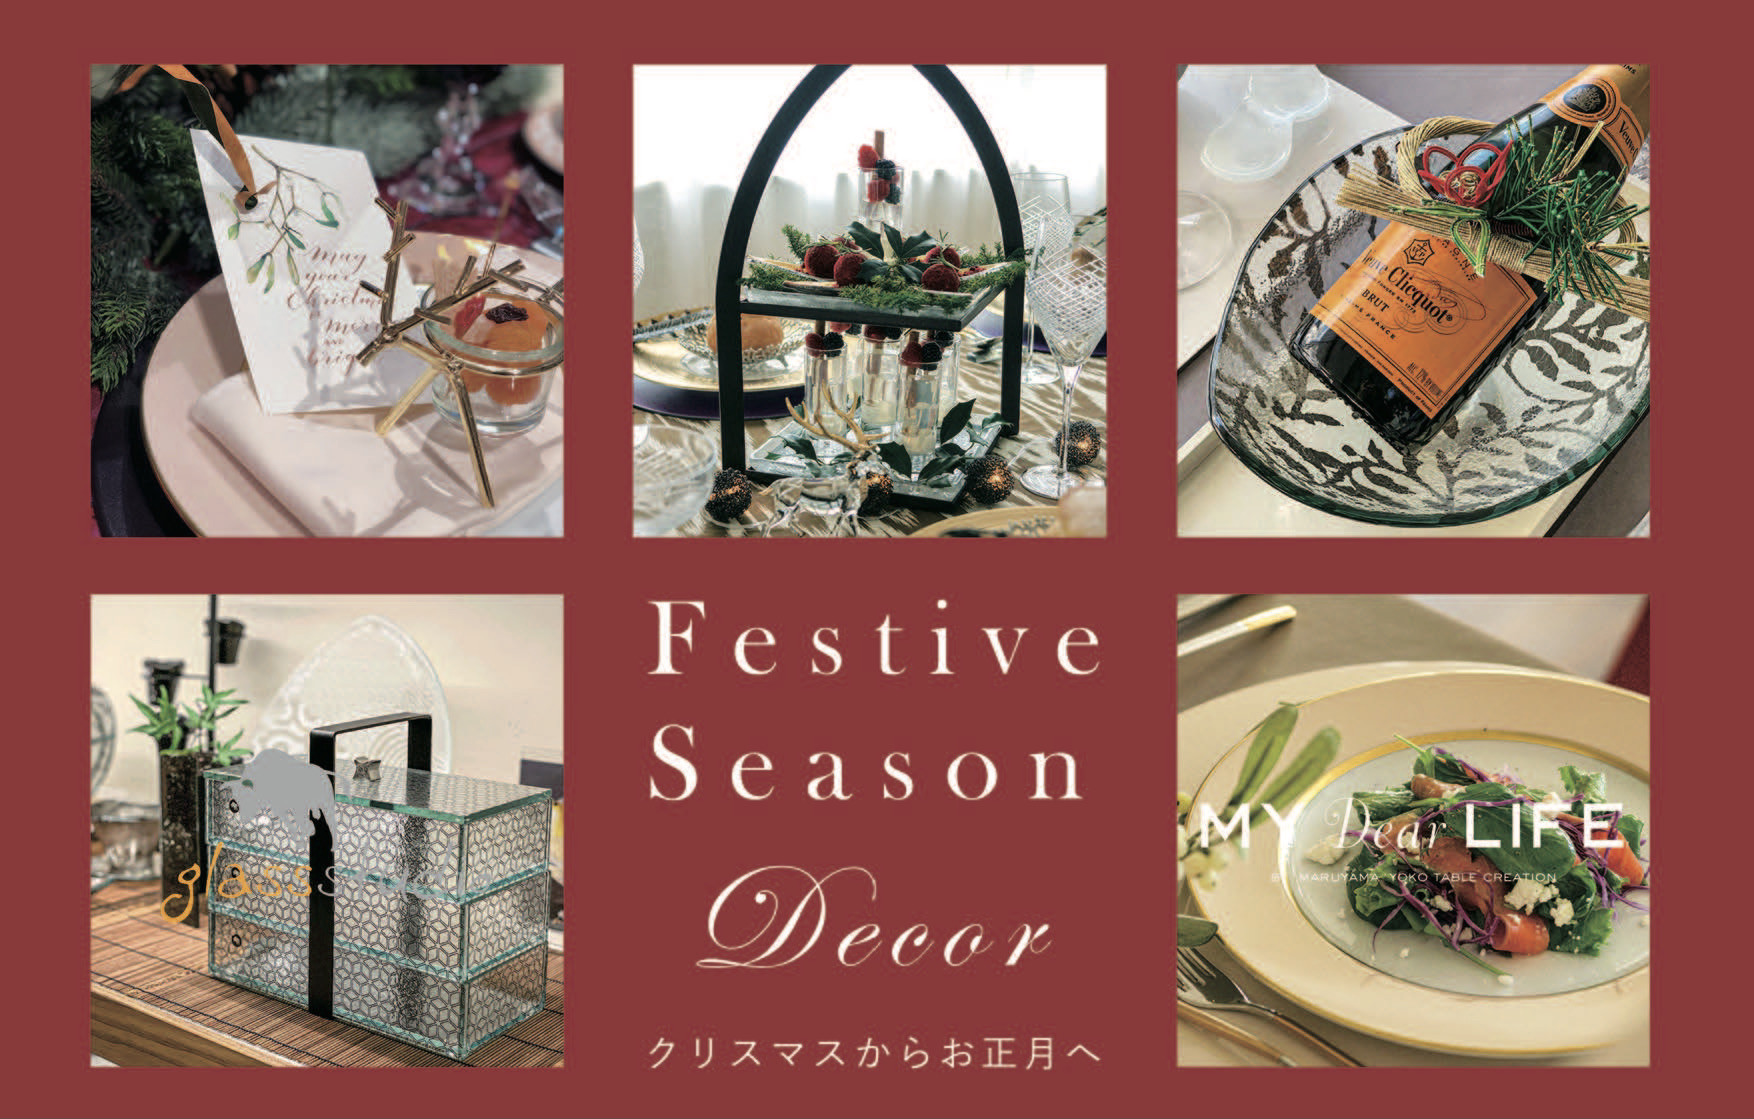 MY Dear LIFE × GLASS STUDIO Japan Festive Season Decor〜クリスマスからお正月へ〜